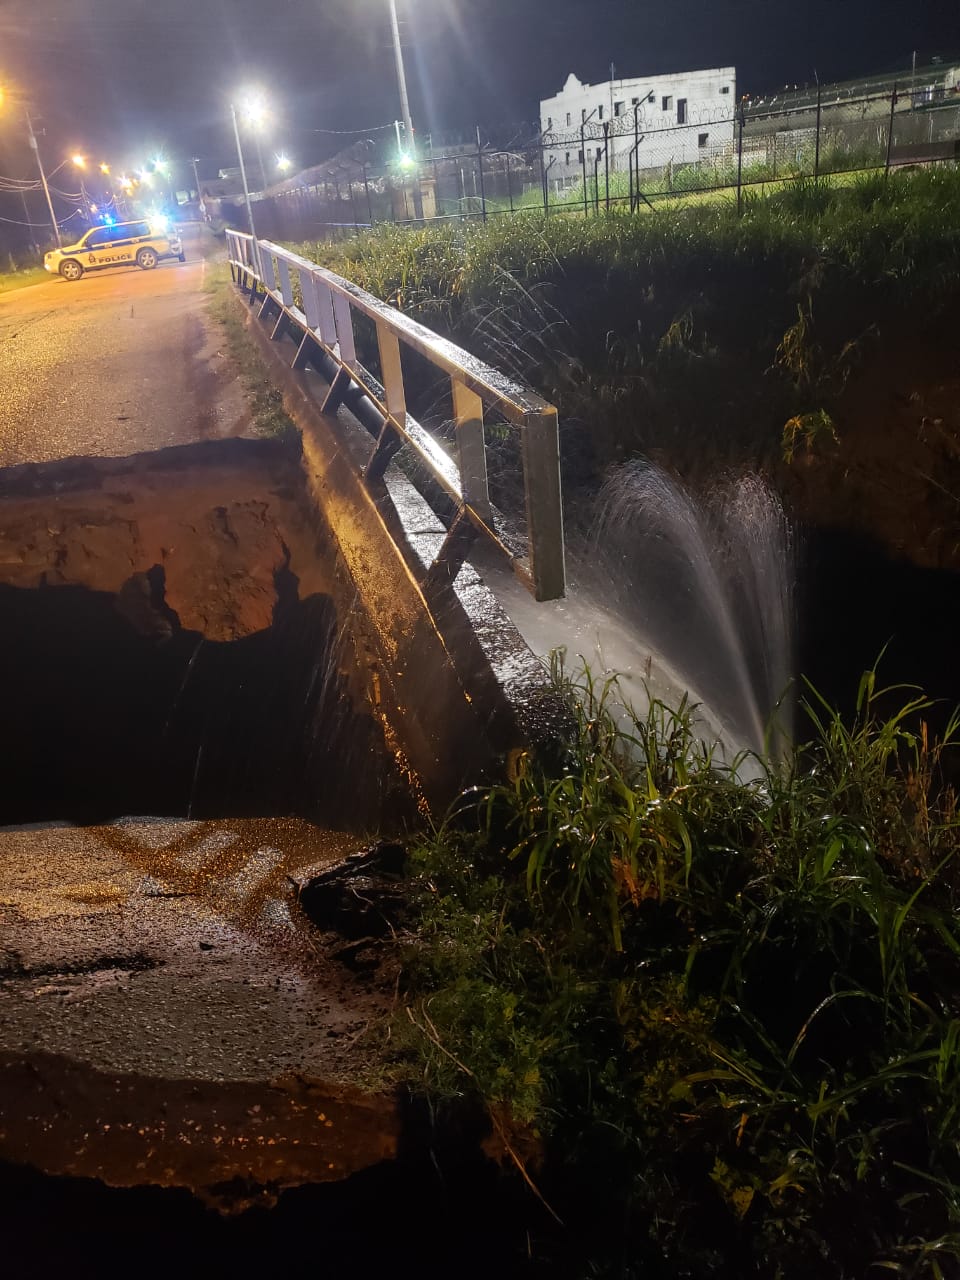 WASA denies being responsible for bridge collapse in Arouca